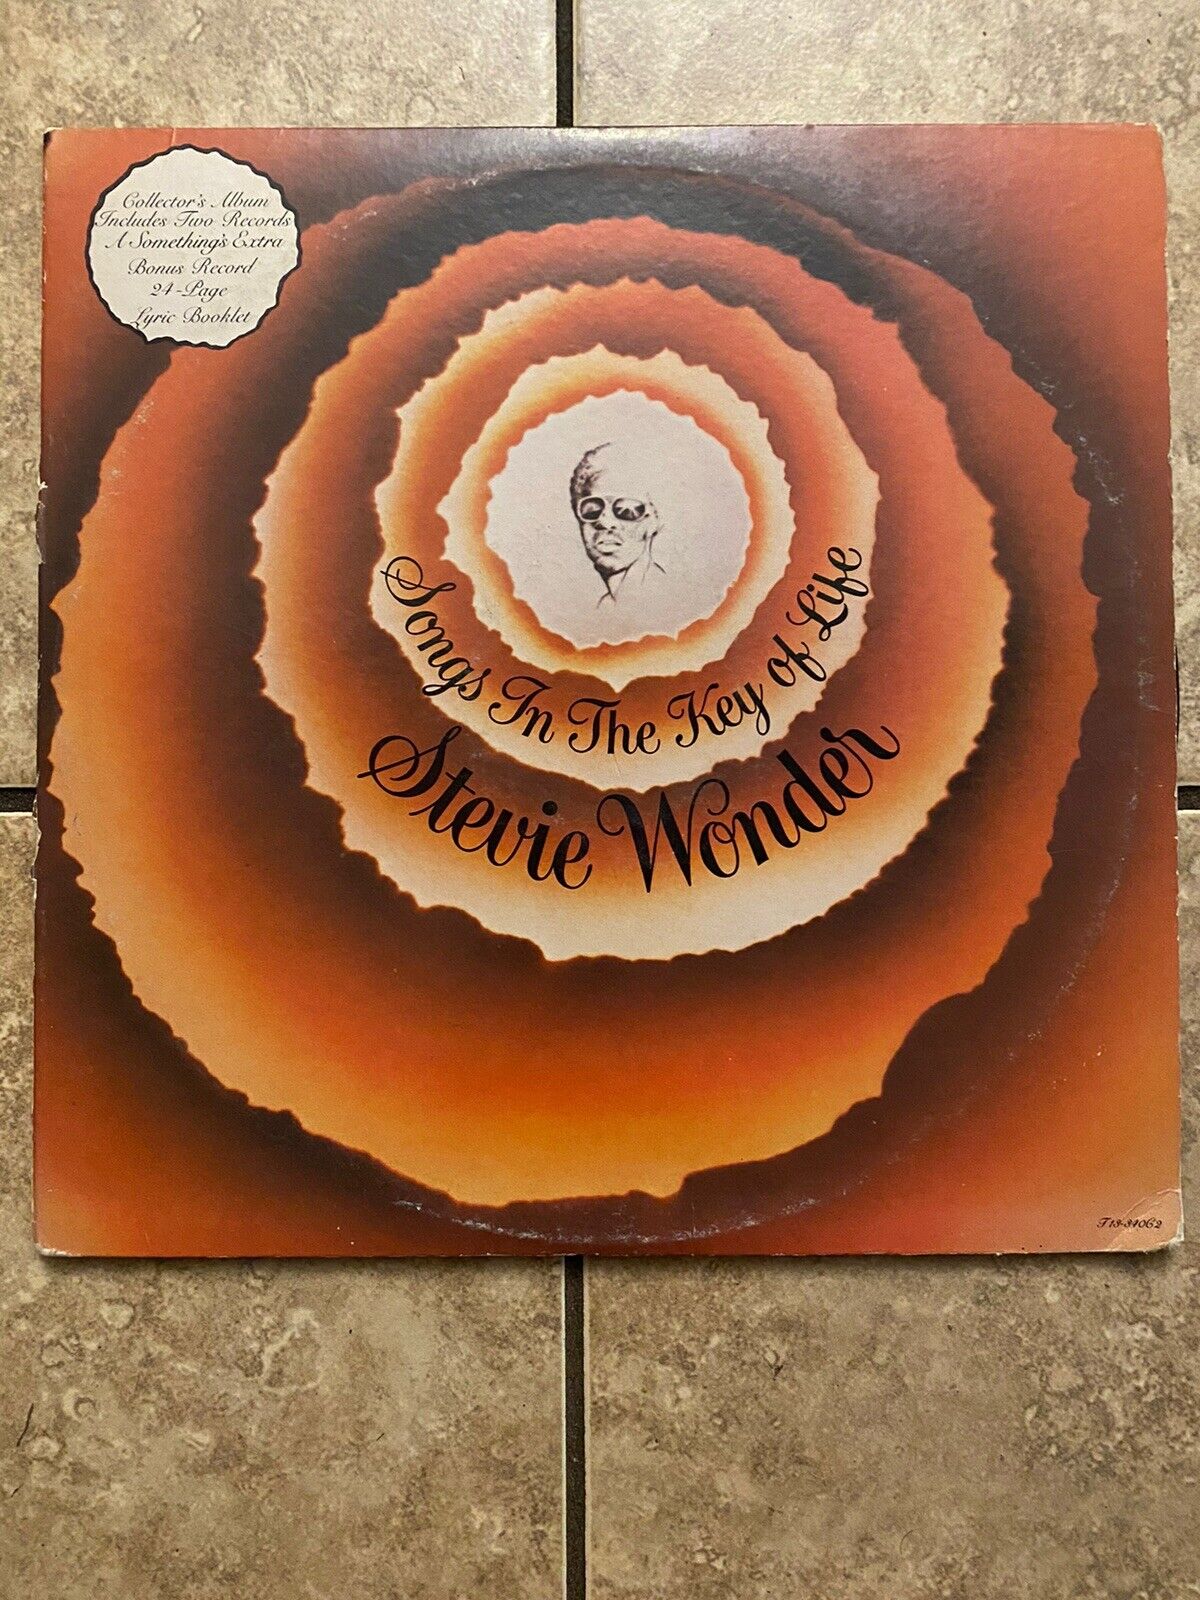 STEVIE WONDER - Songs In The Key Of Life Vinyl Record 2 LP - 1st Press